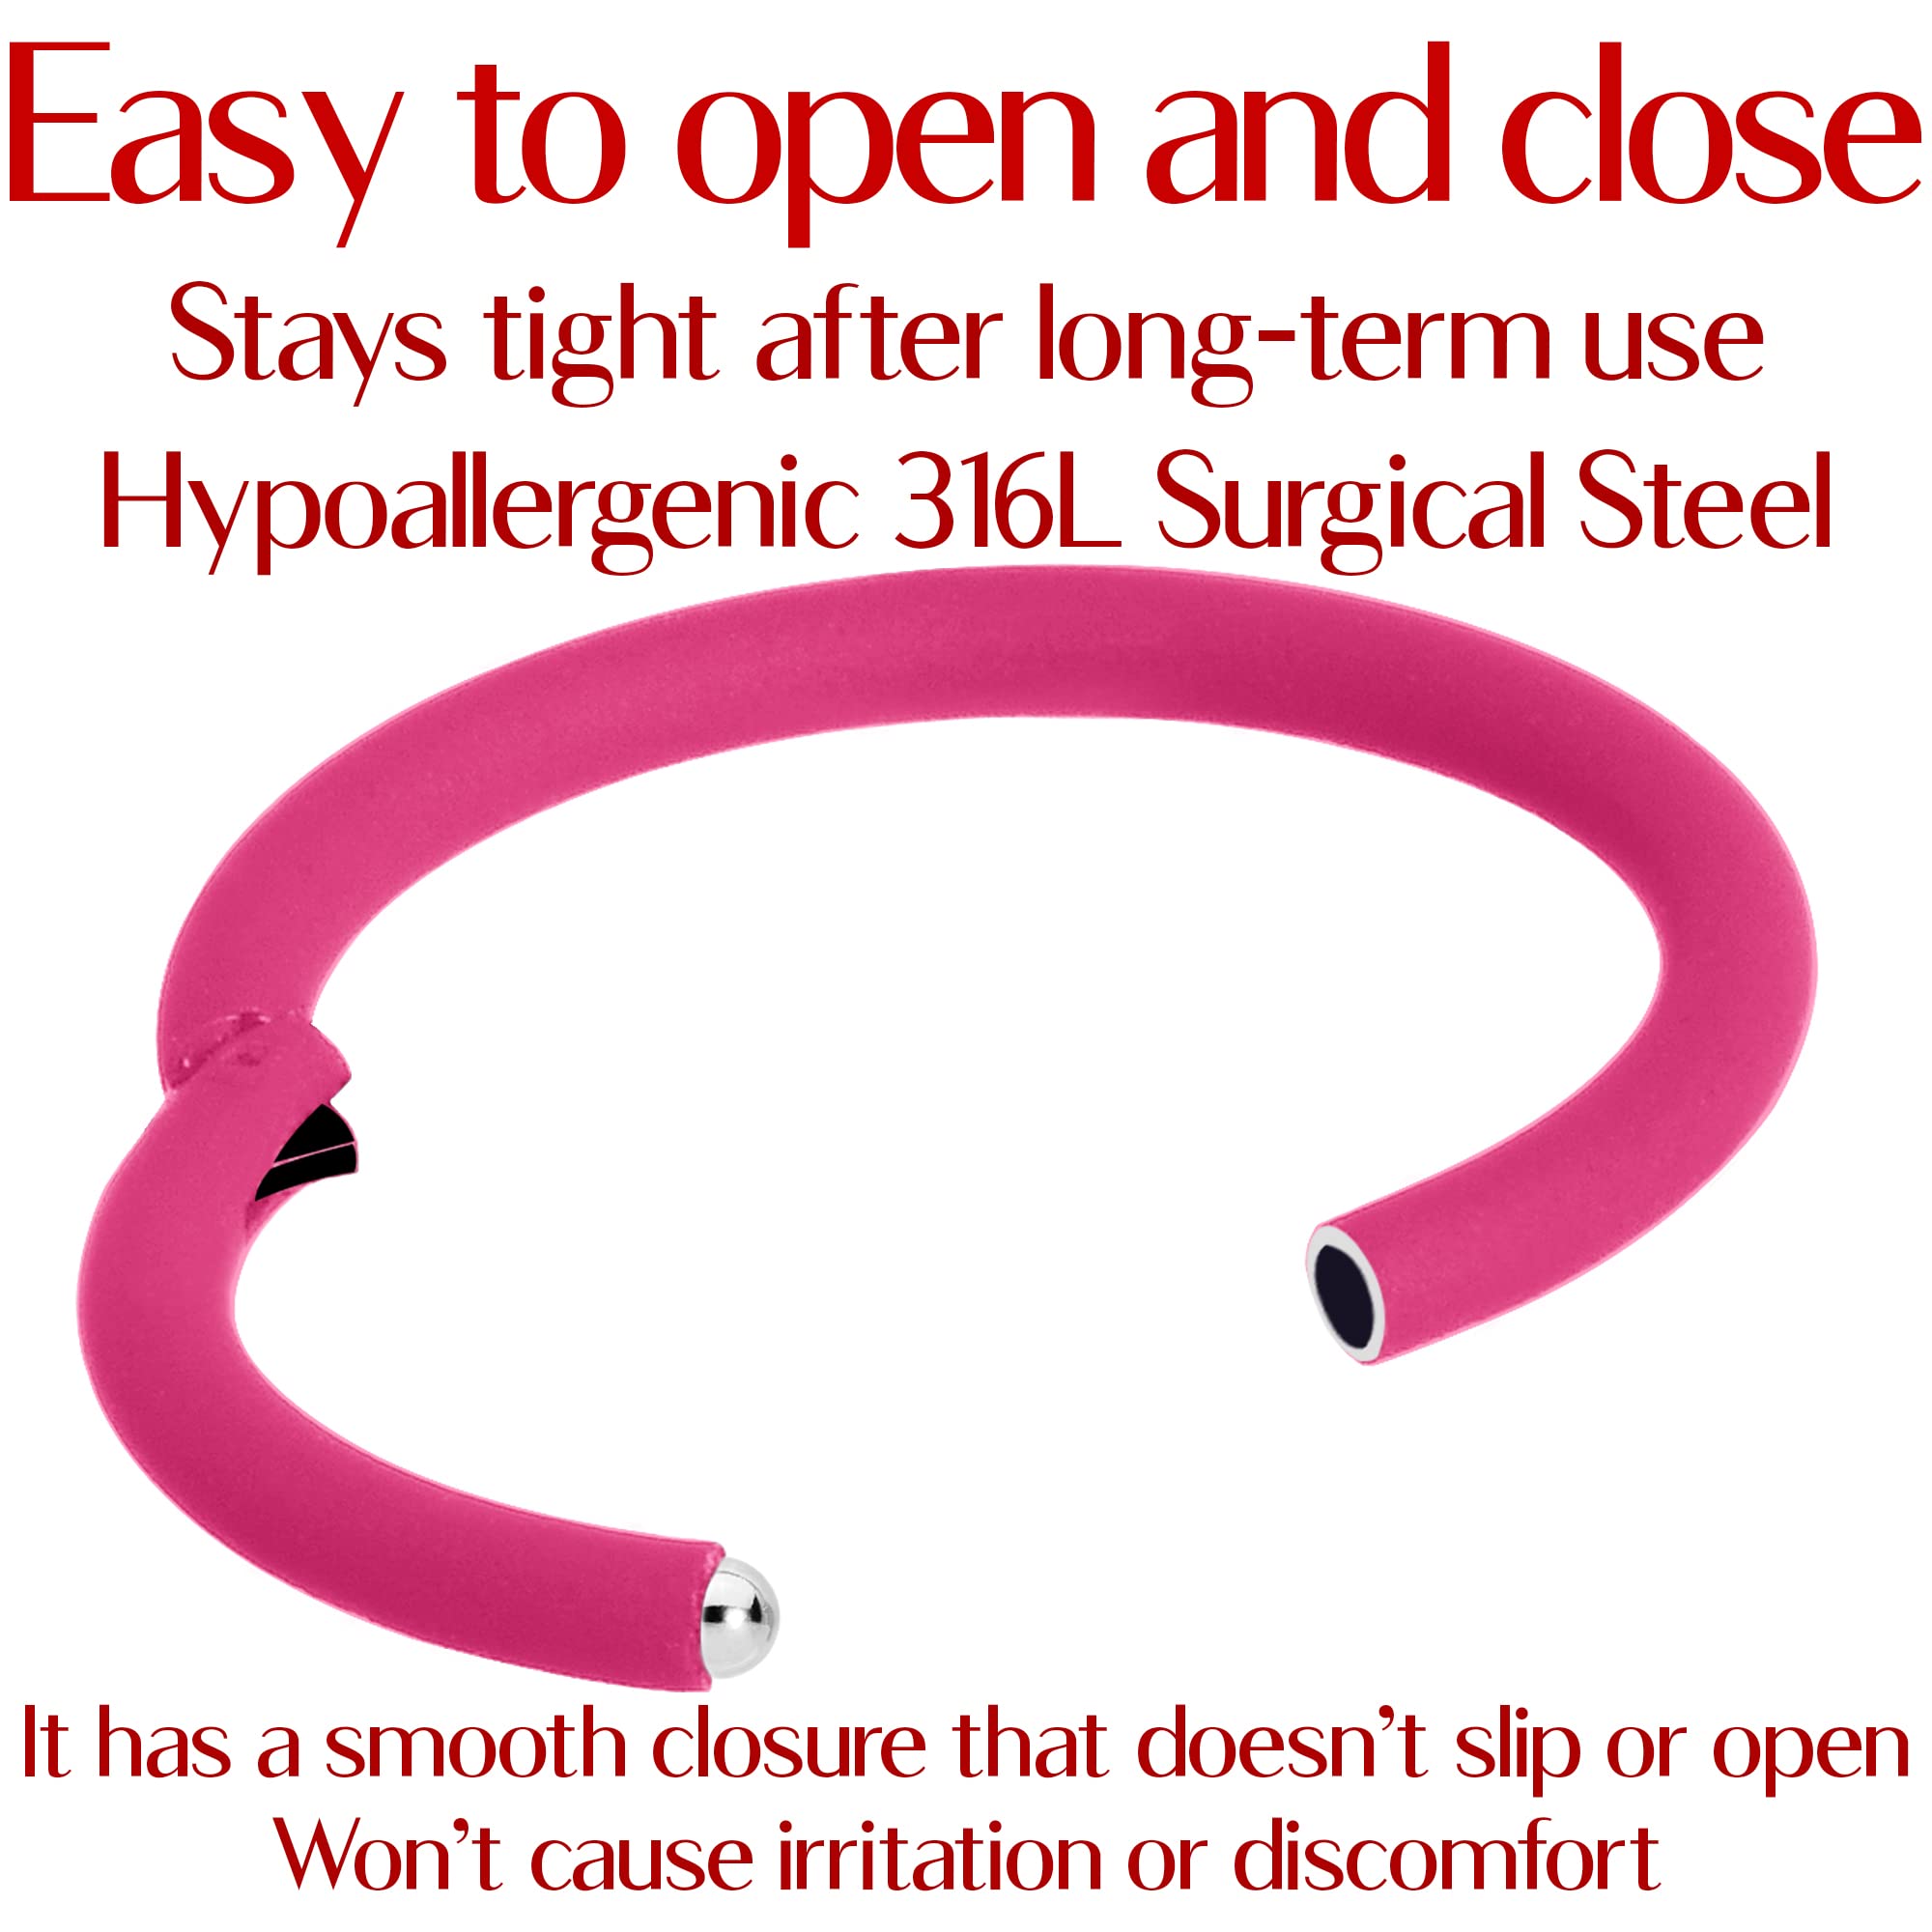 Body Candy Segment Hoop Rings 18 Gauge 316l Surgical Steel Lip Ring Cartilage